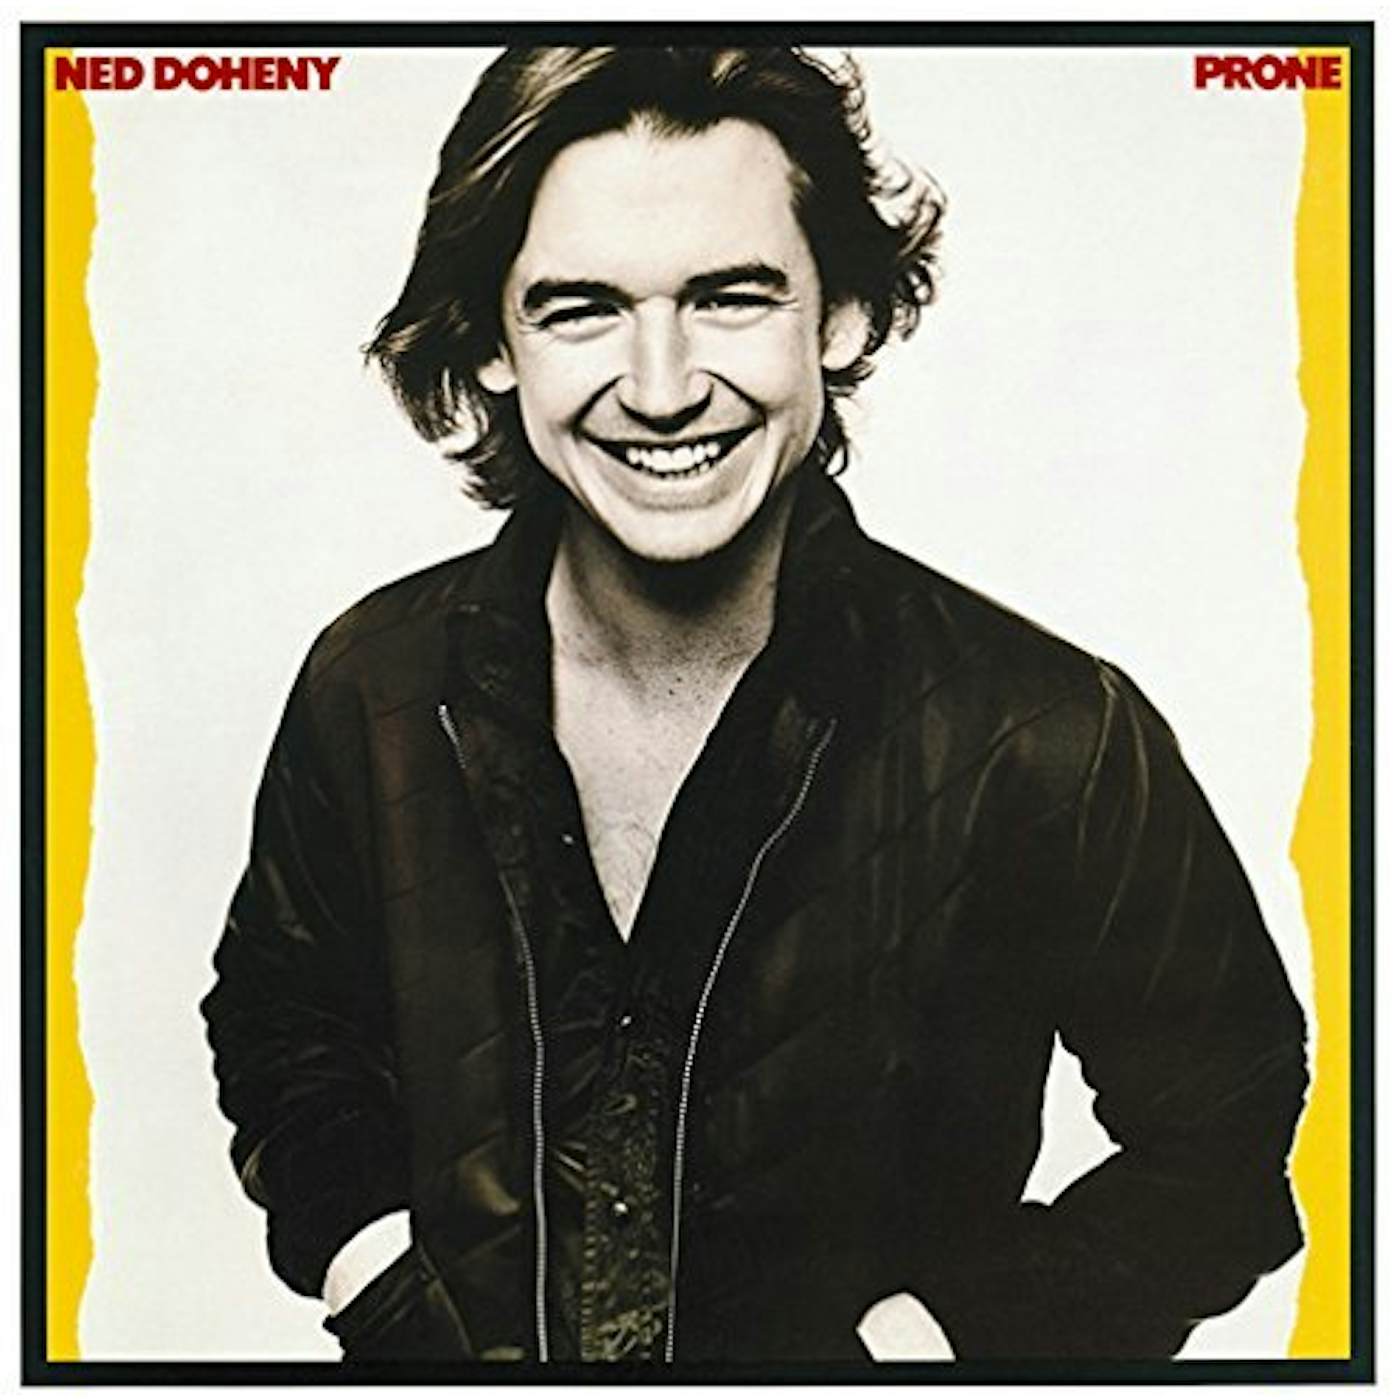 Ned Doheny PRONE CD